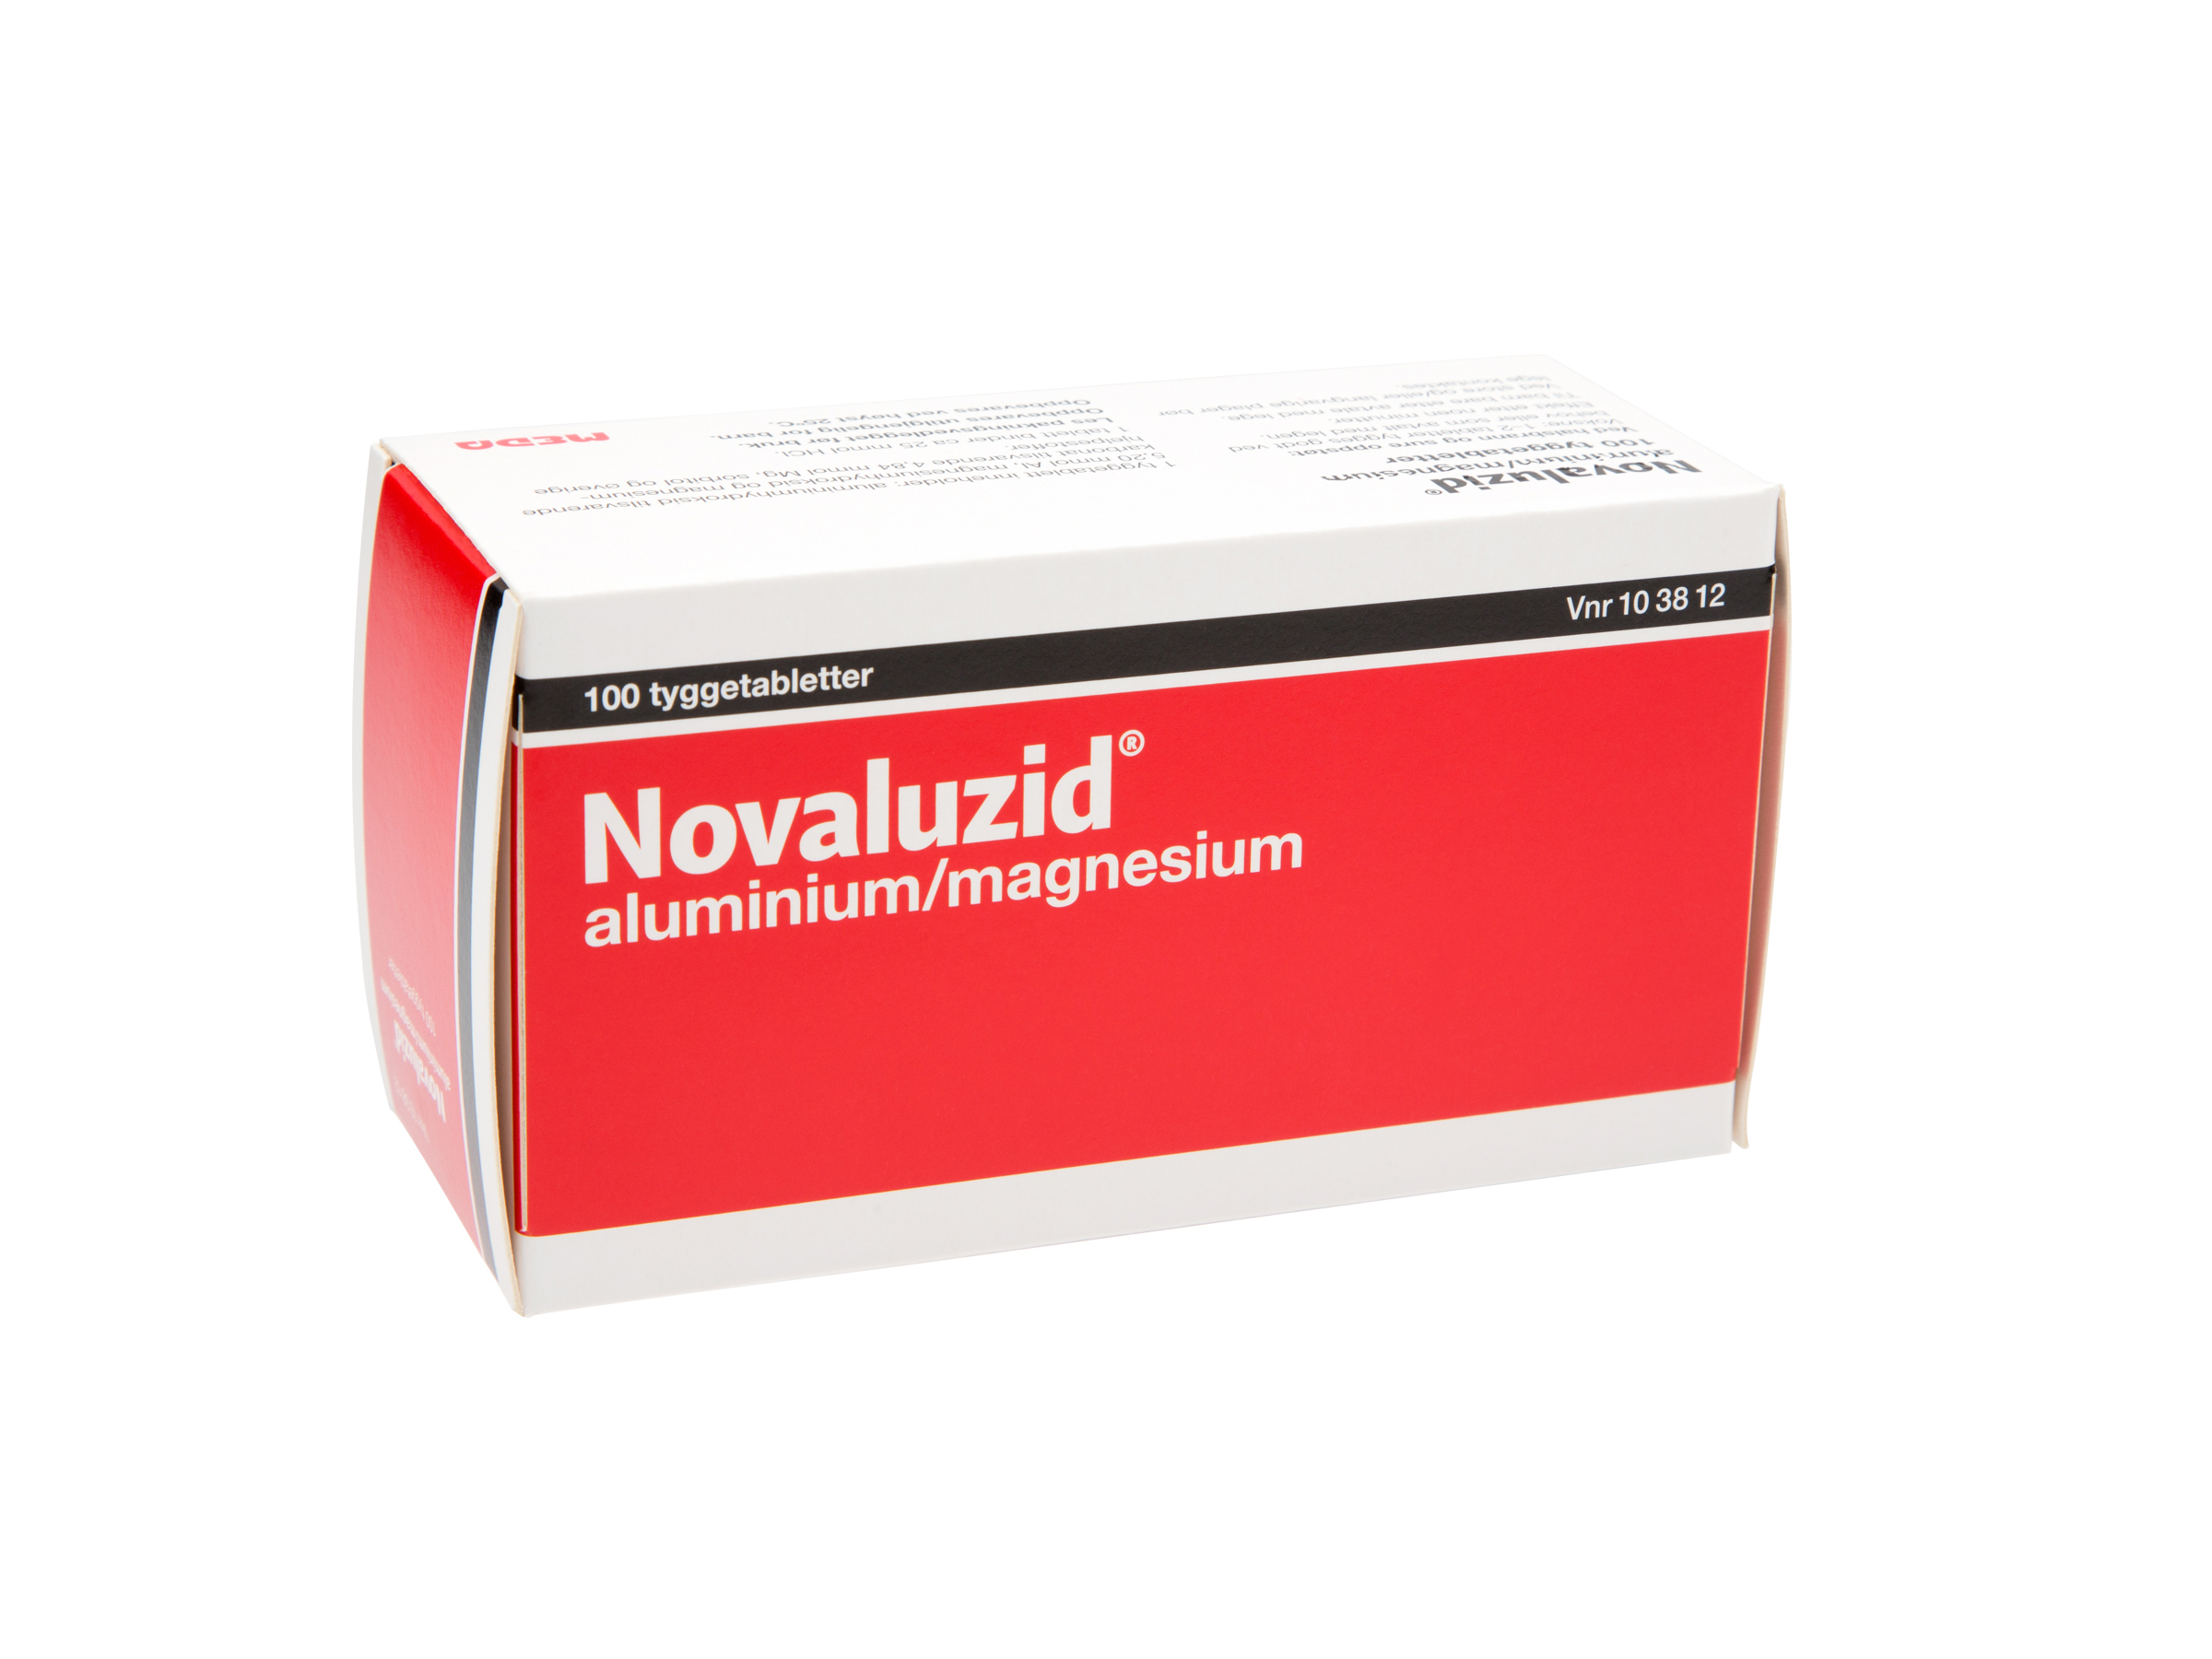 Novaluzid Mint tyggetabletter, 100 stk. på brett